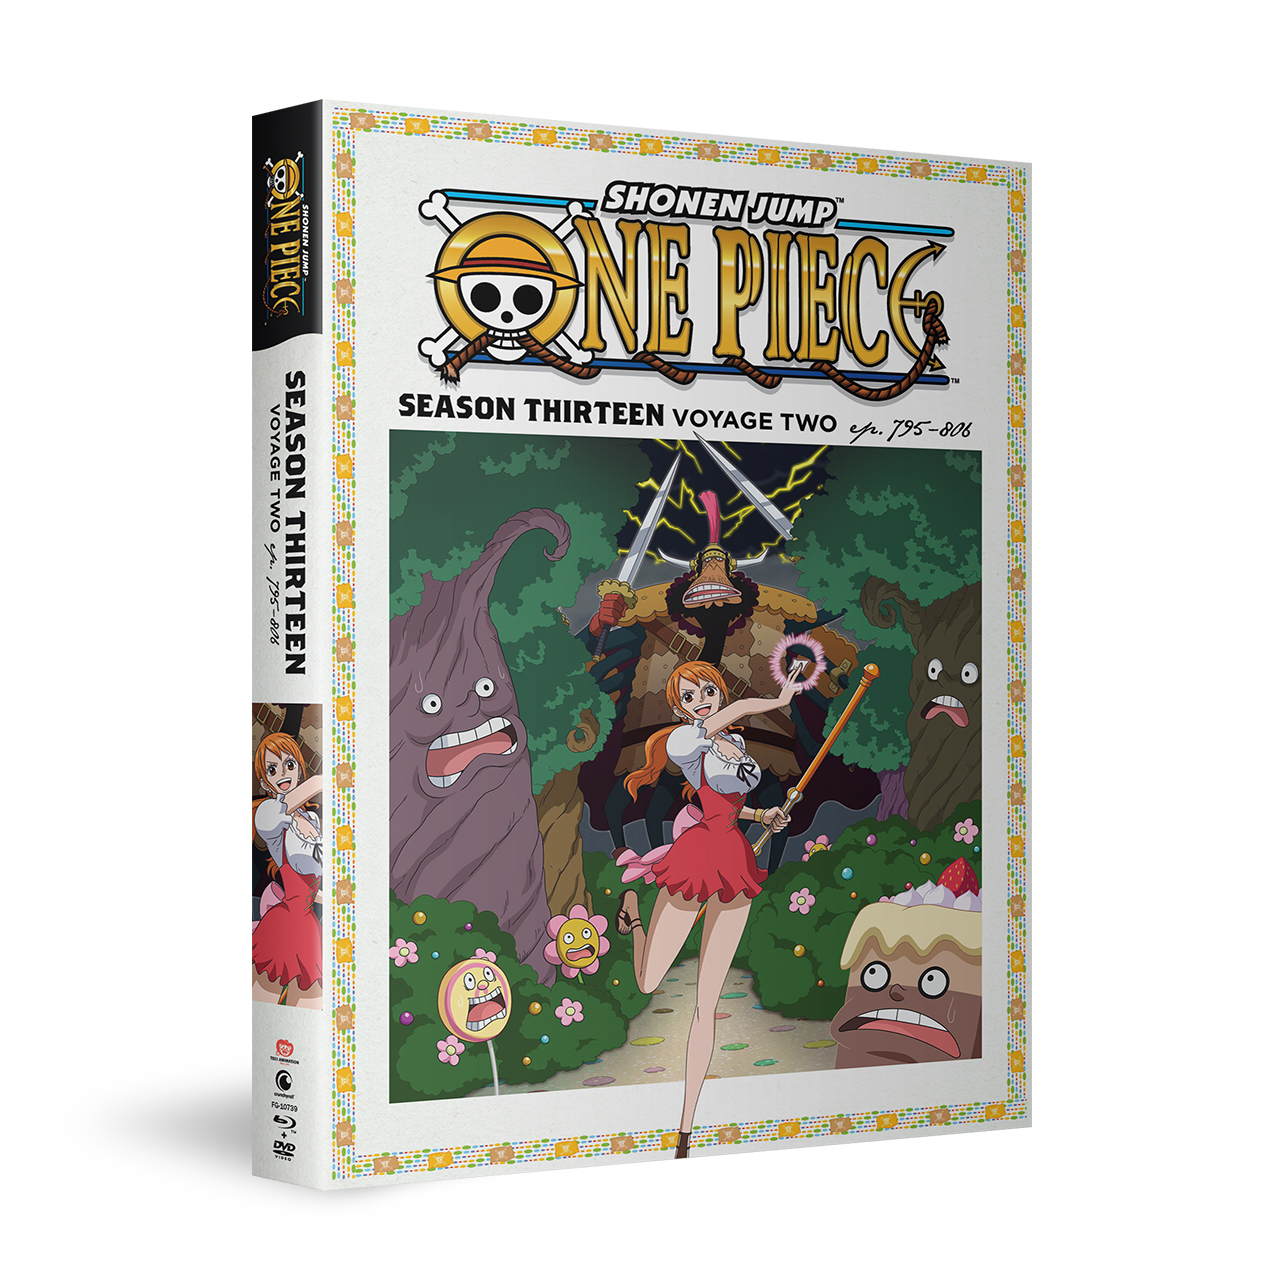 One Piece - Season 13 Voyage 3 - Blu-ray + DVD image count 1